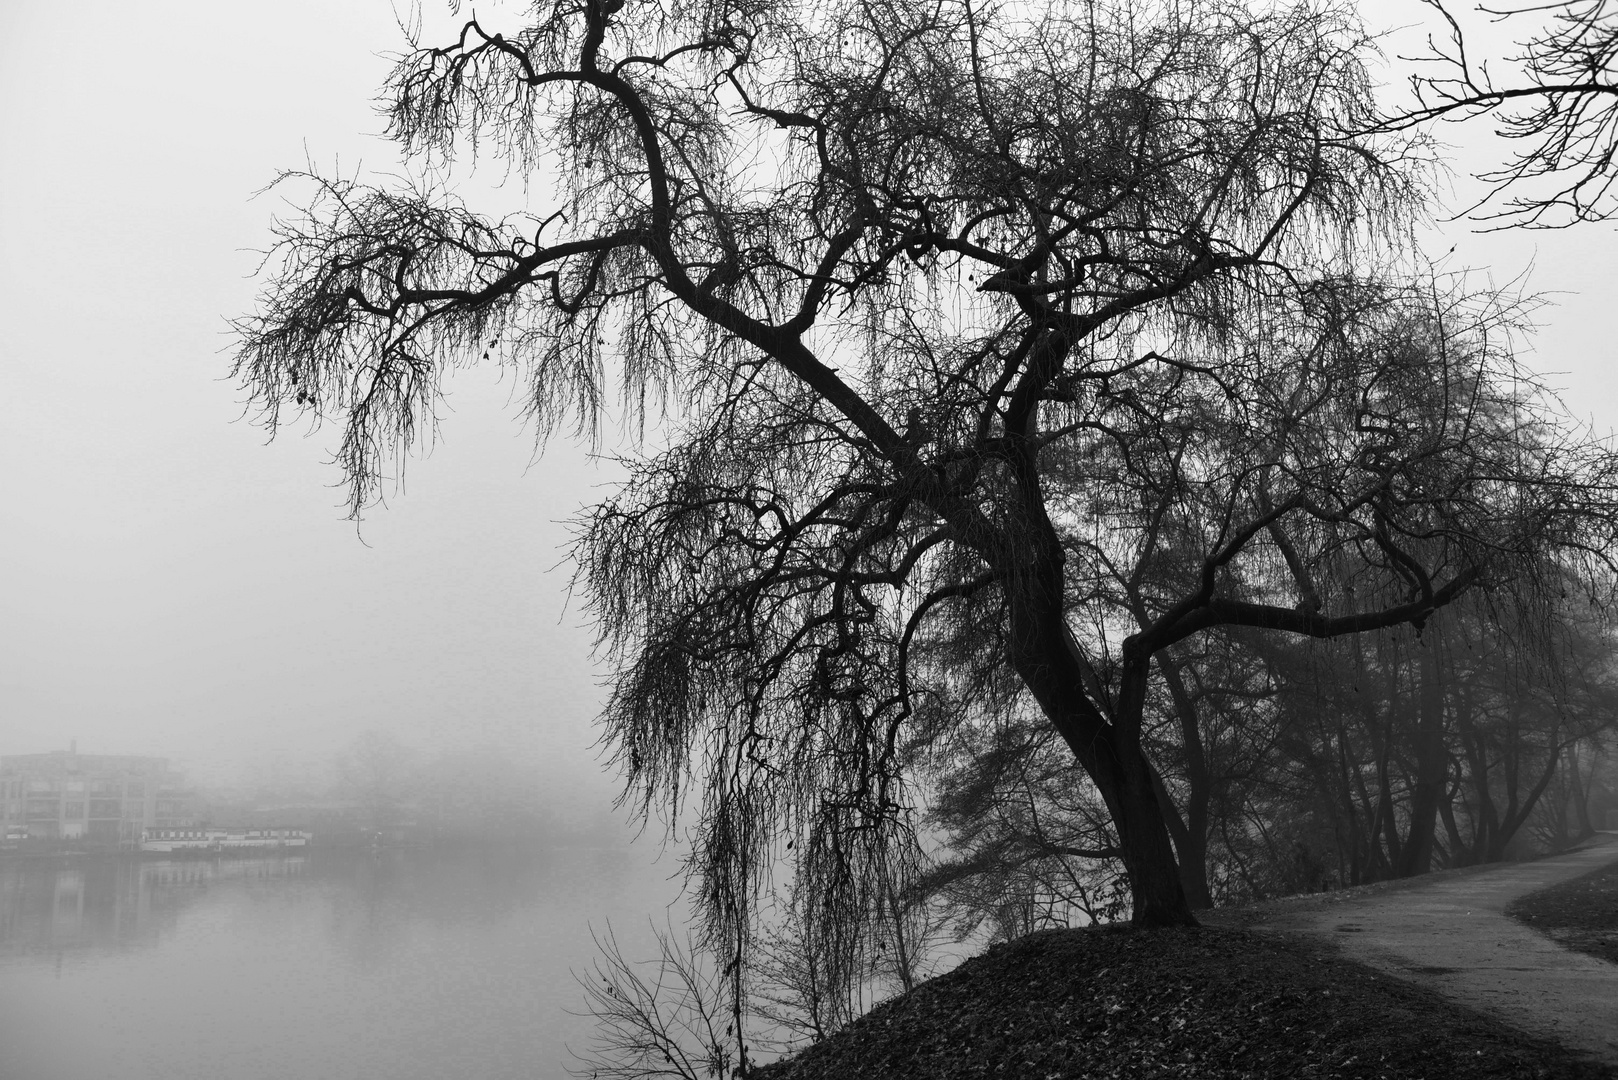 Stausee Kettwig im Nebel